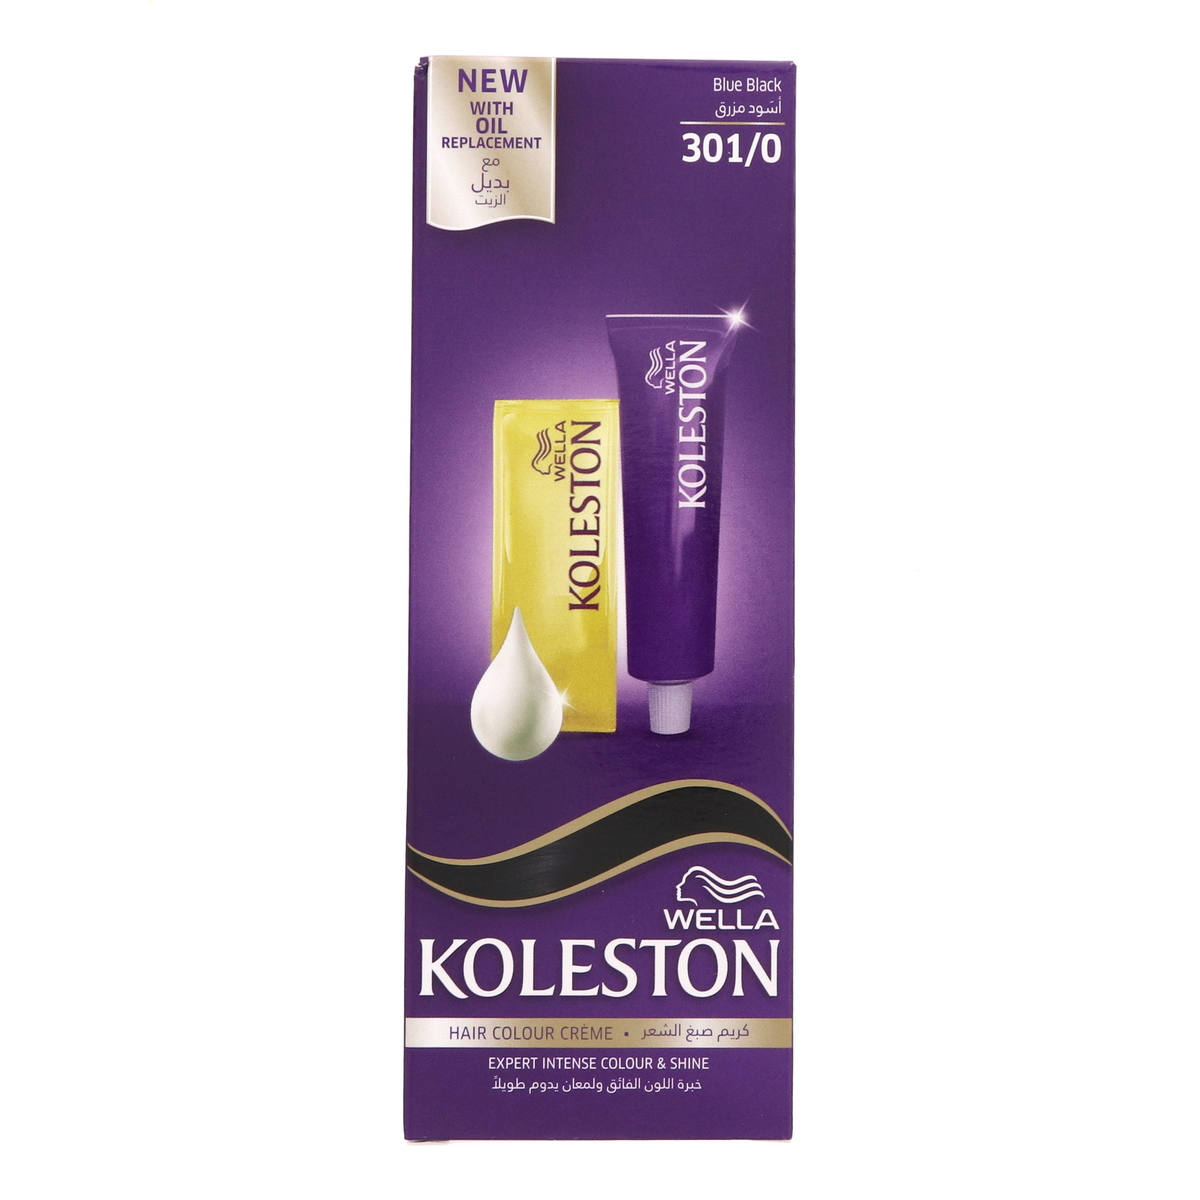 Buy Wella Koleston Hair Colour Creme 301/0 Blue Black 50ml ...